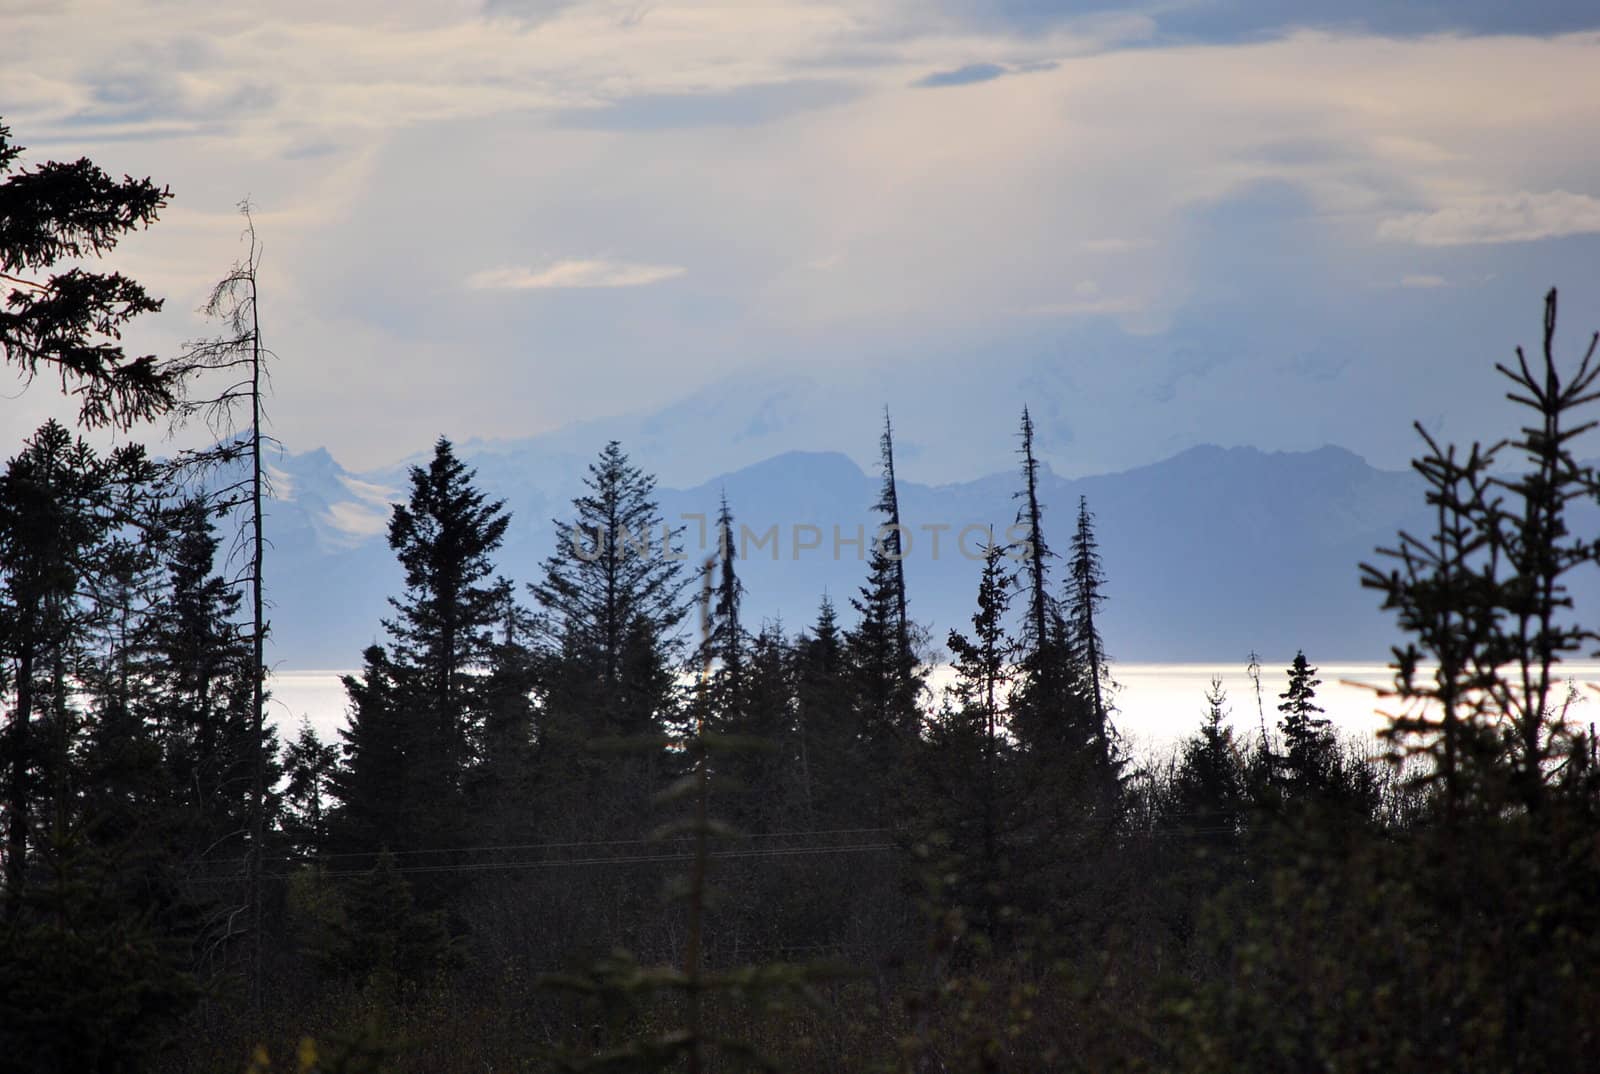 Mt. Illiamna across Cook Inlet, Alaska